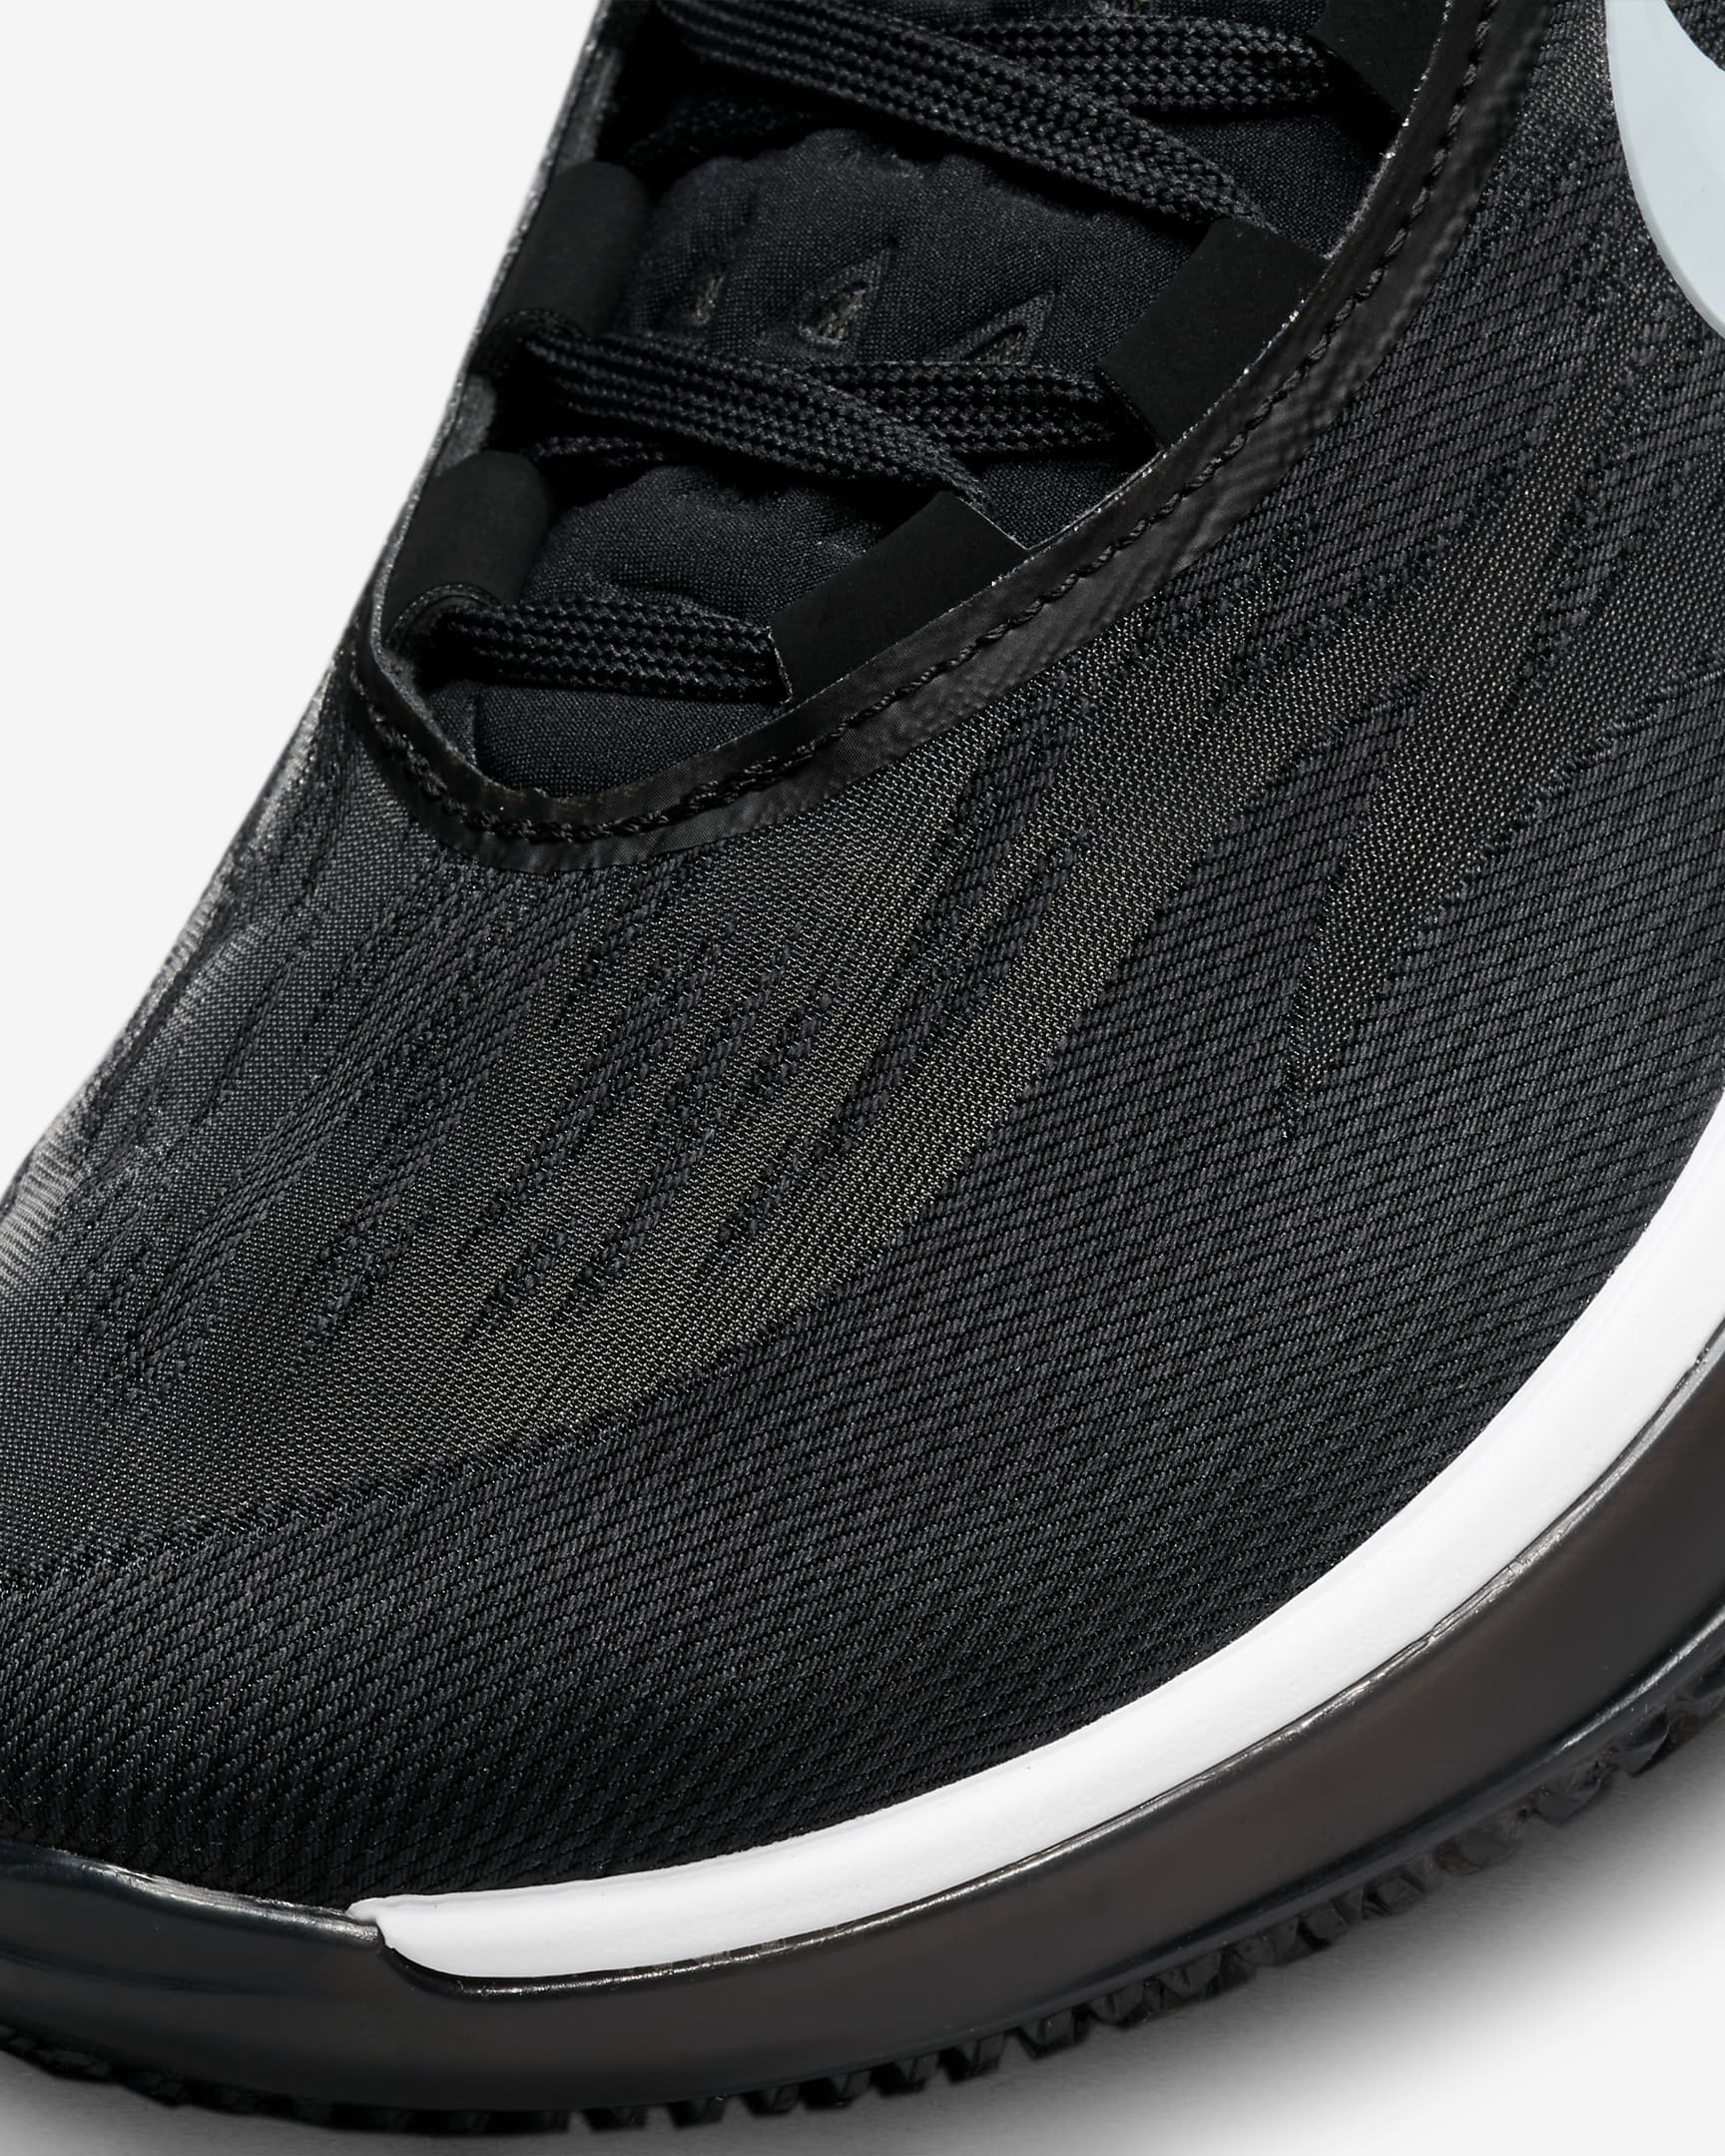 Nike G.T. Cut 2 Men's Basketball Shoes - Black/Anthracite/Football Grey/White